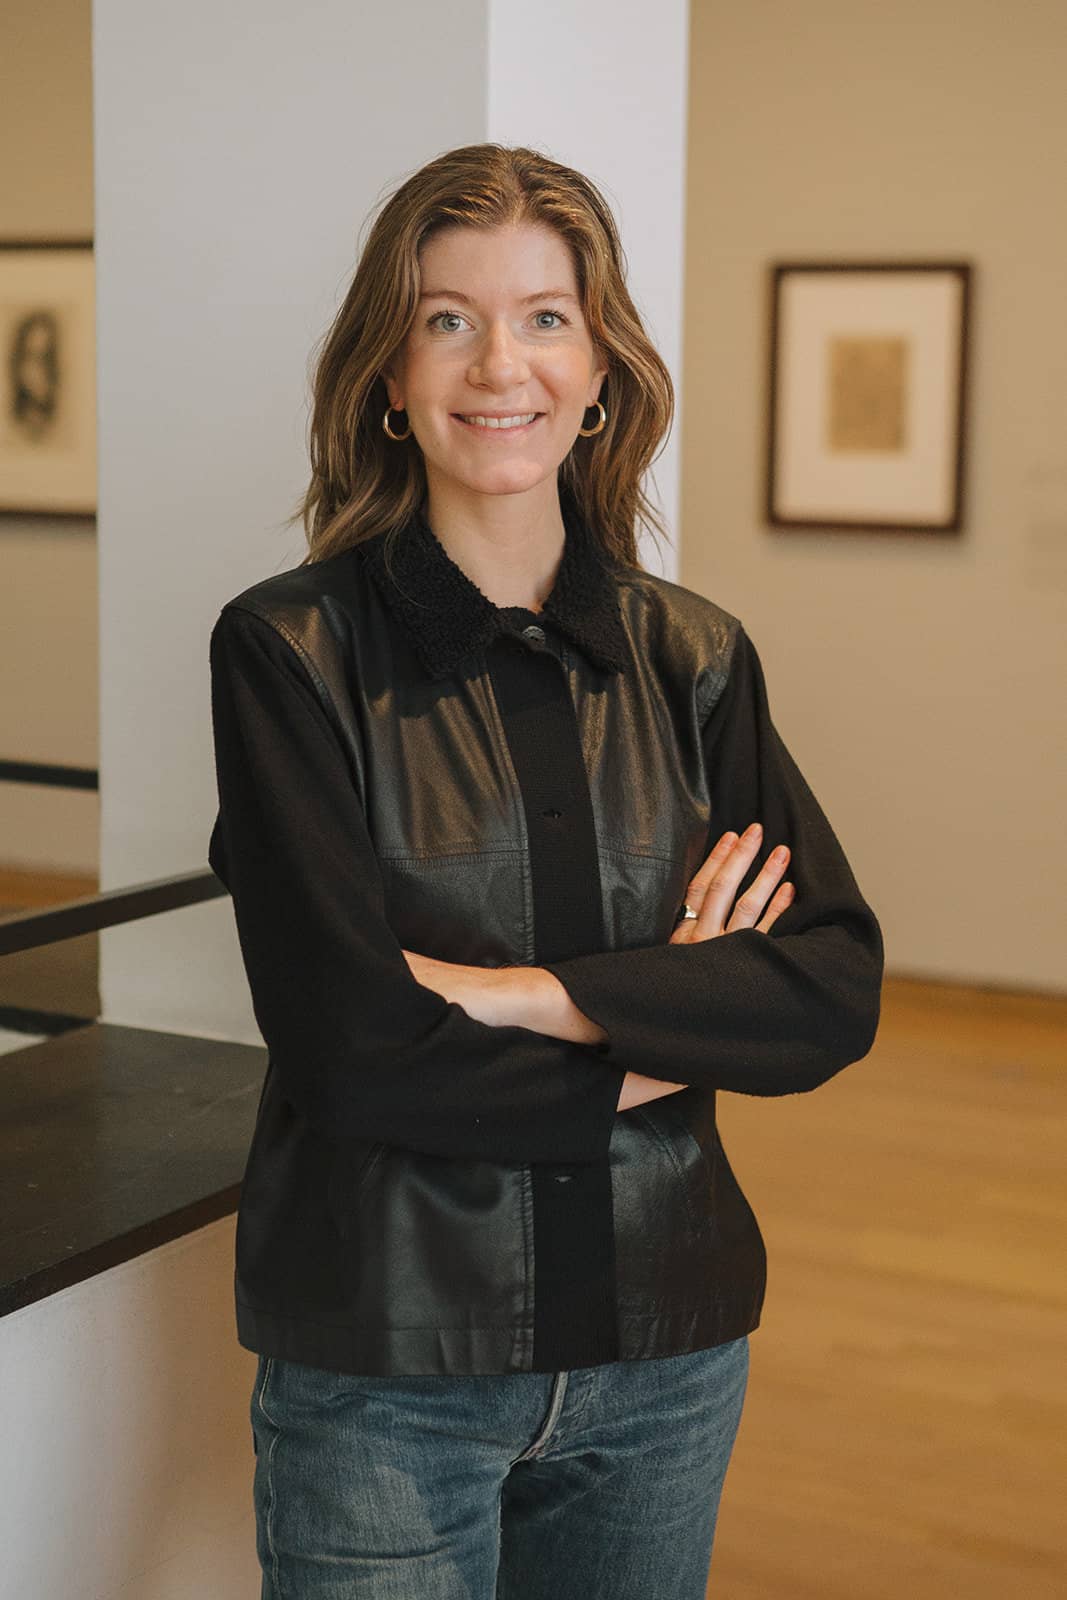 Woman in black jacket smiling in art gallery.